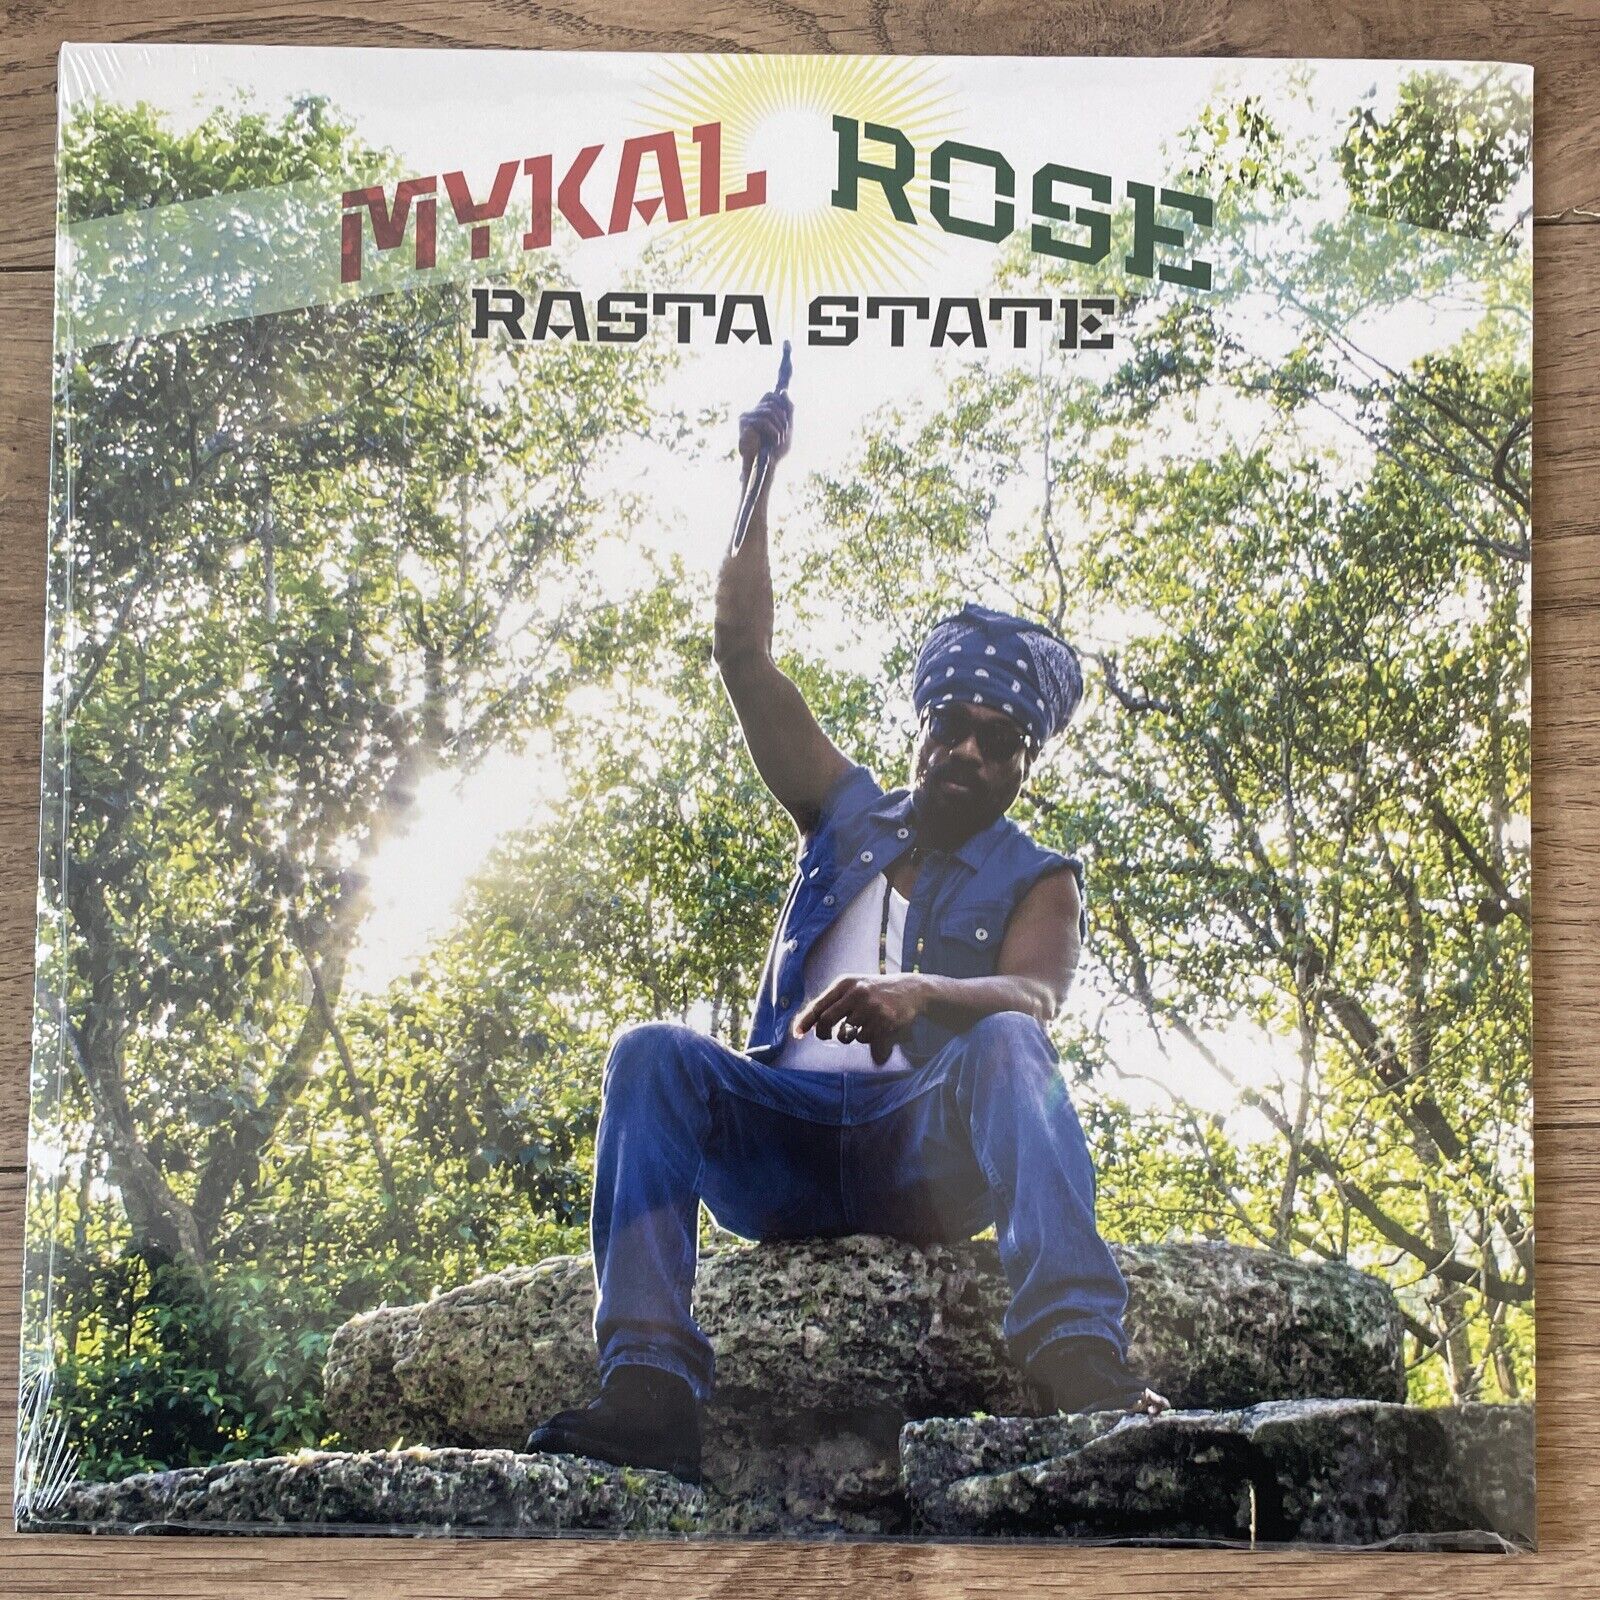 Mykal Rose - Rasta State Vinyl LP 2016 VP Records Brand New Sealed Copy Mint